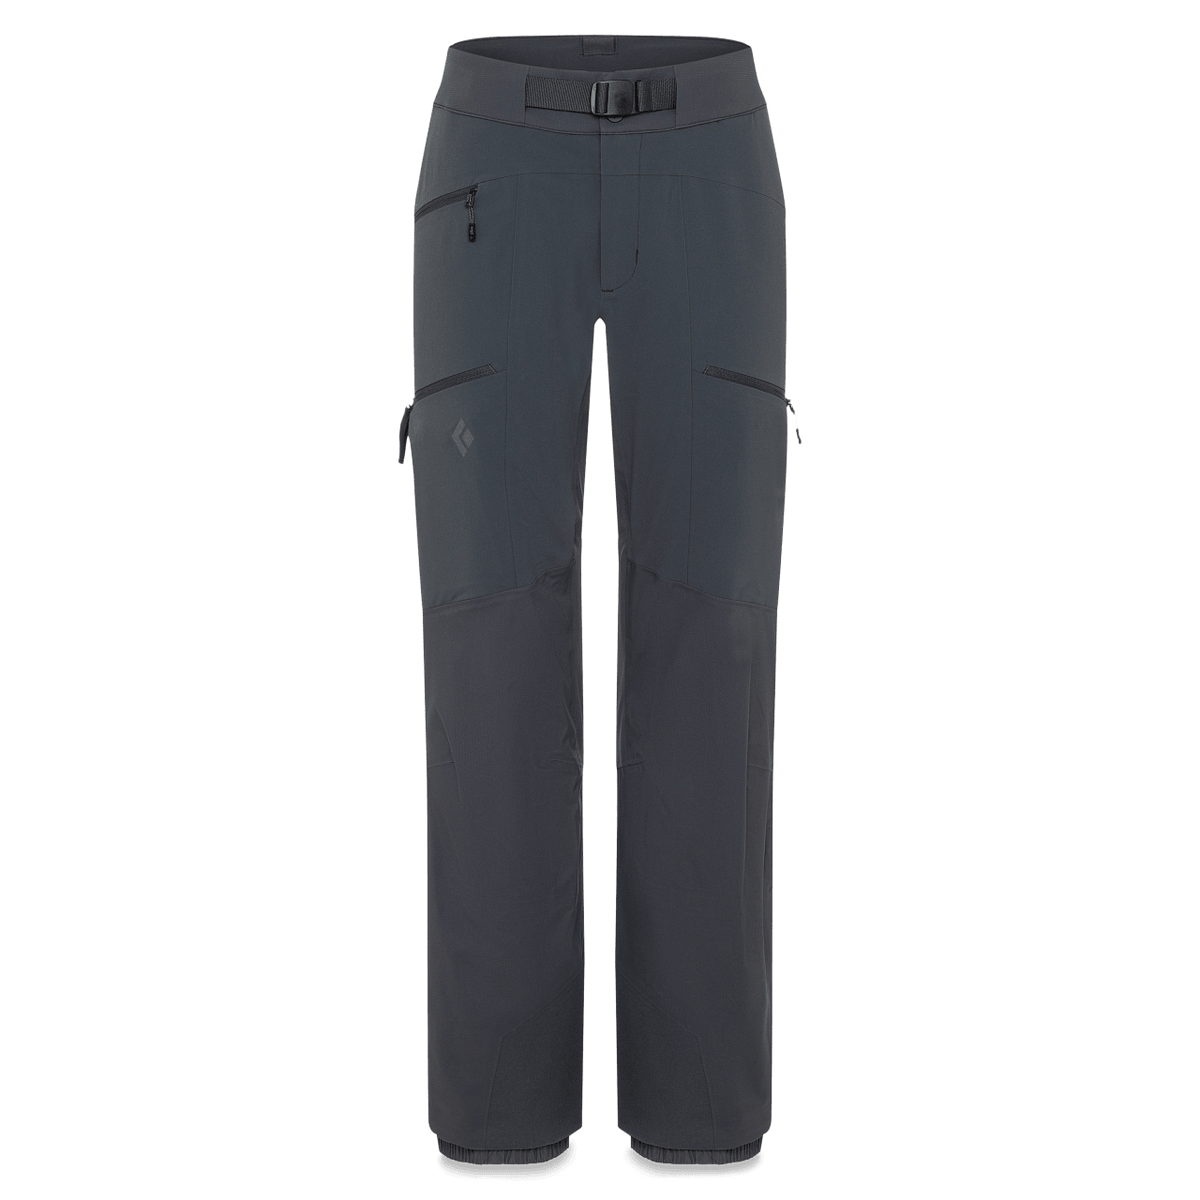 Dawn Patrol Pants - Women's - Black Diamond Gear